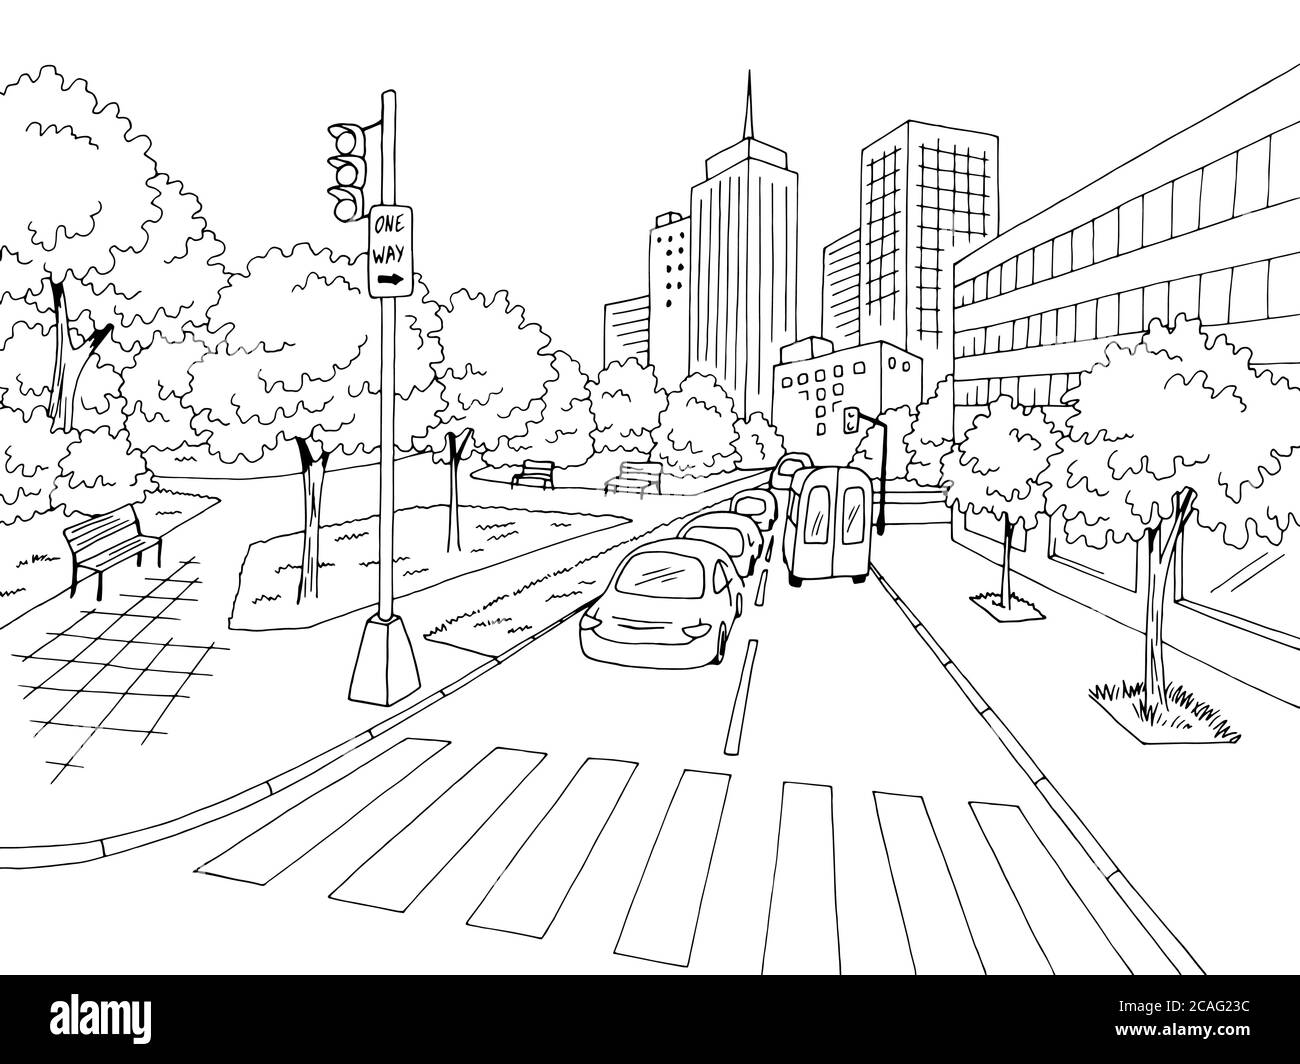 Straße Straße Grafik schwarz weiß Stadt Landschaft Skizze Illustration Vektor Stock Vektor